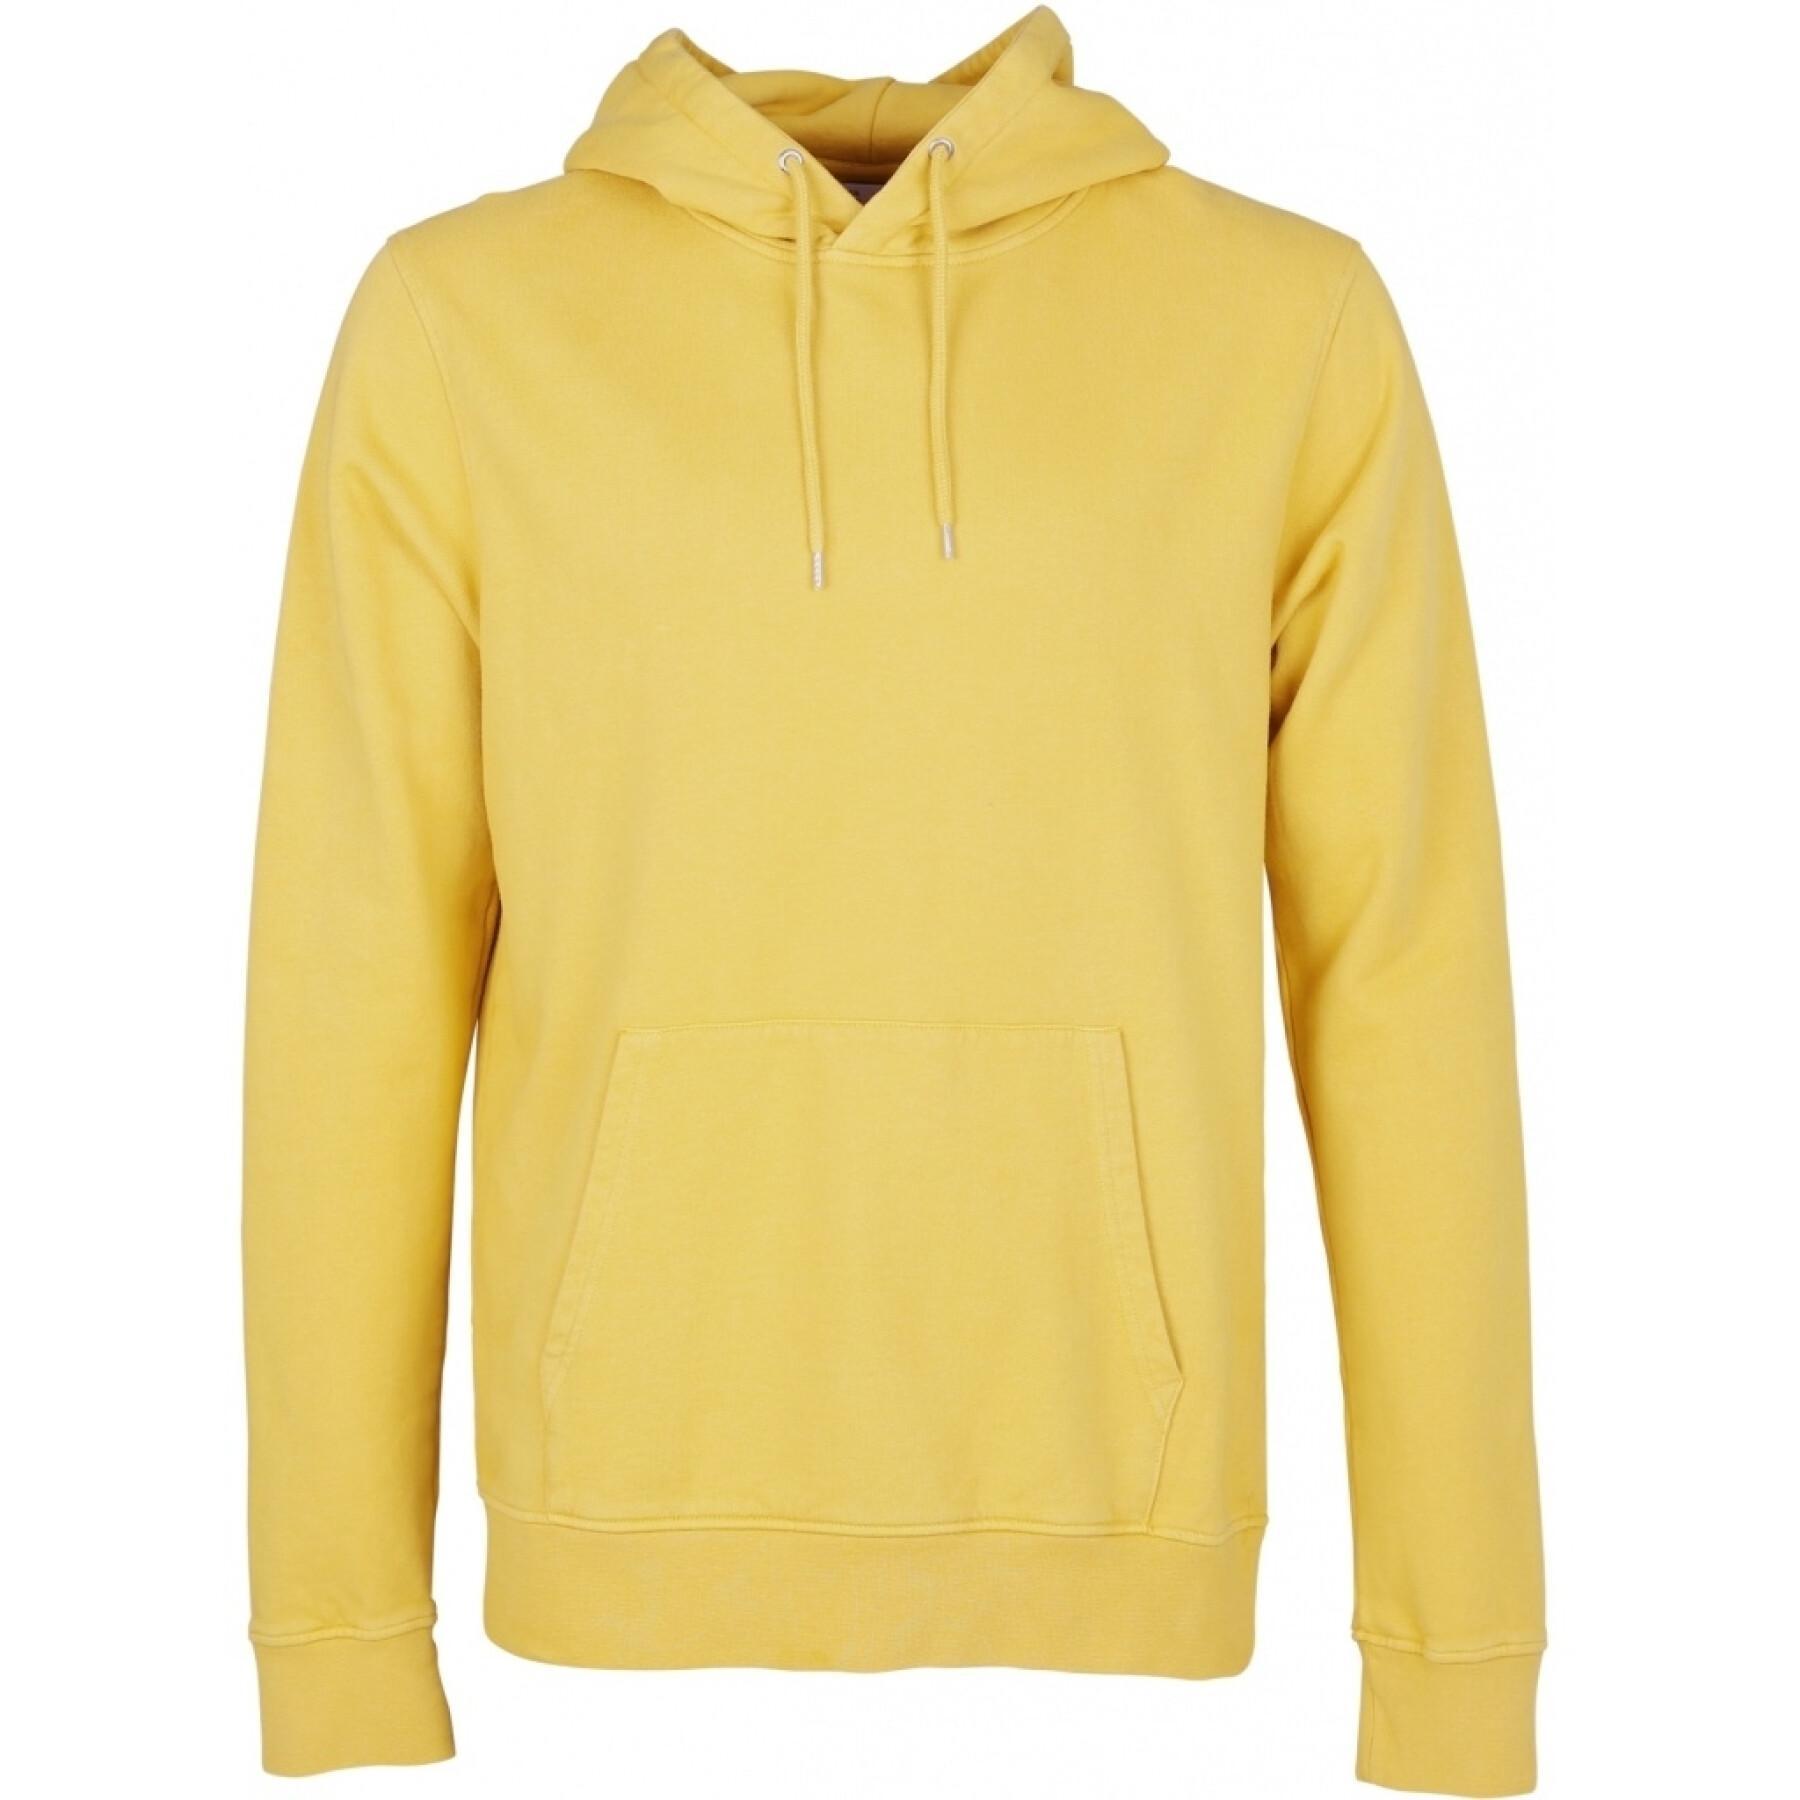 Hooded sweatshirt Colorful Standard Classic Organic lemon yellow